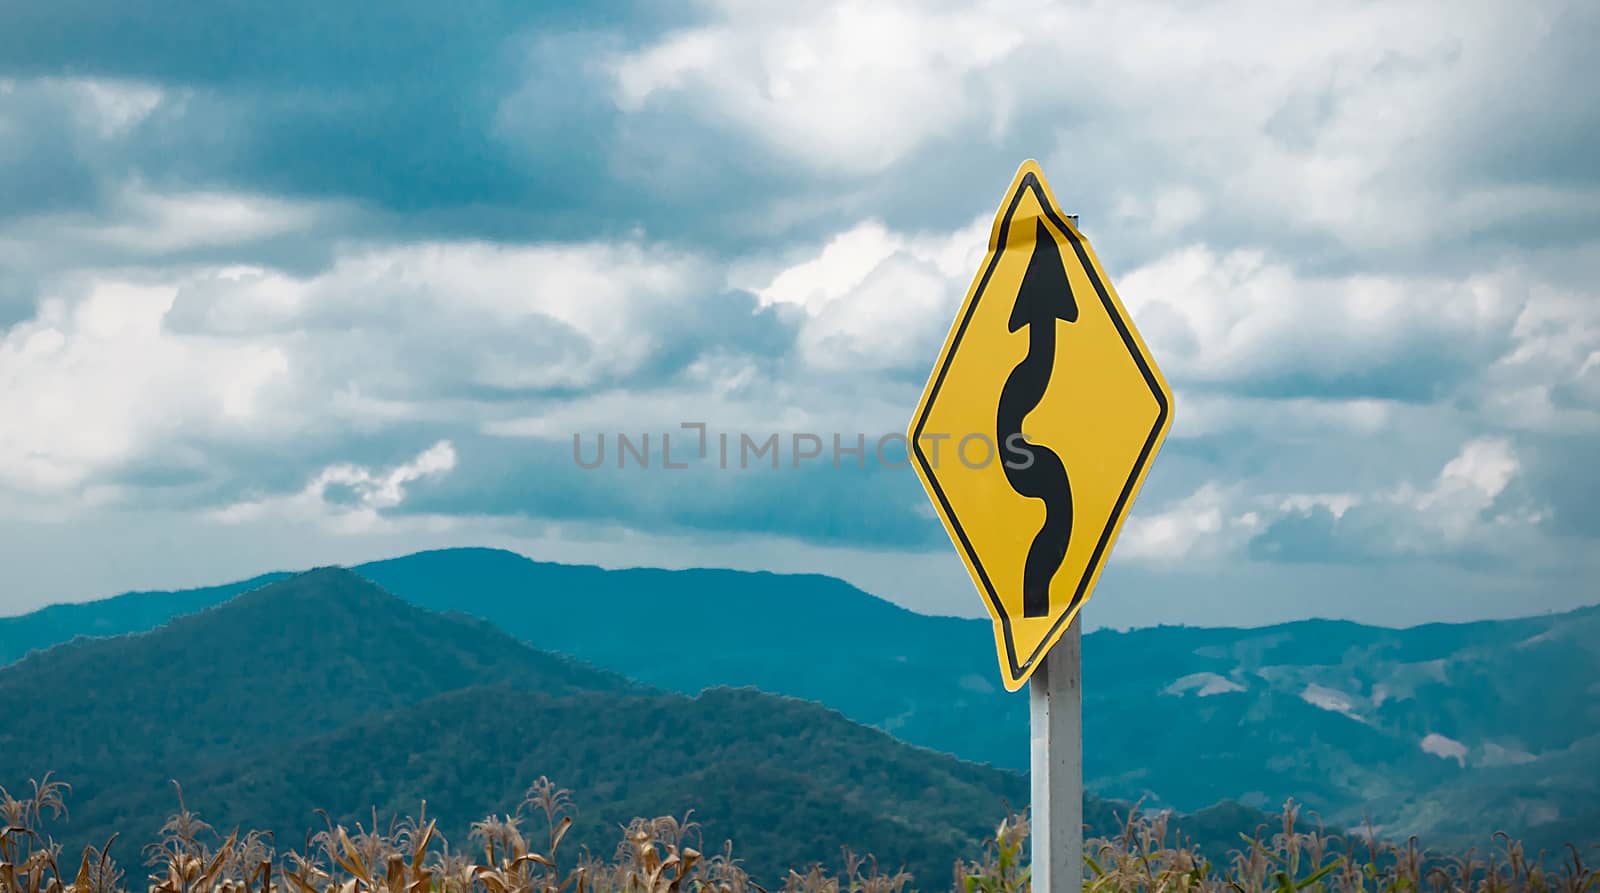 Curve Traffic Sign Blur Landscape Background by kobfujar